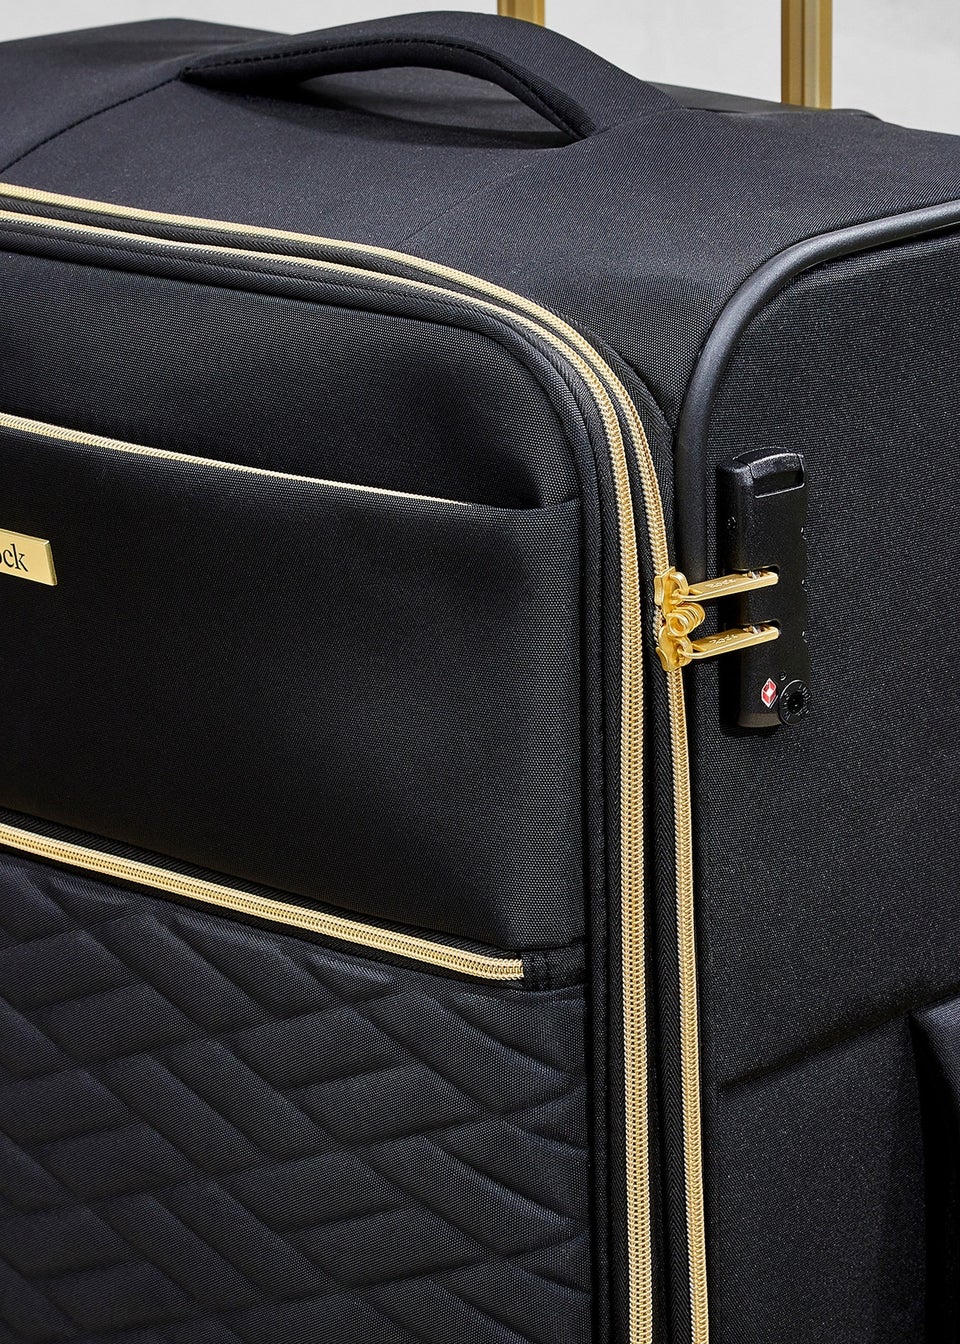 Rock Black Sloane Suitcase